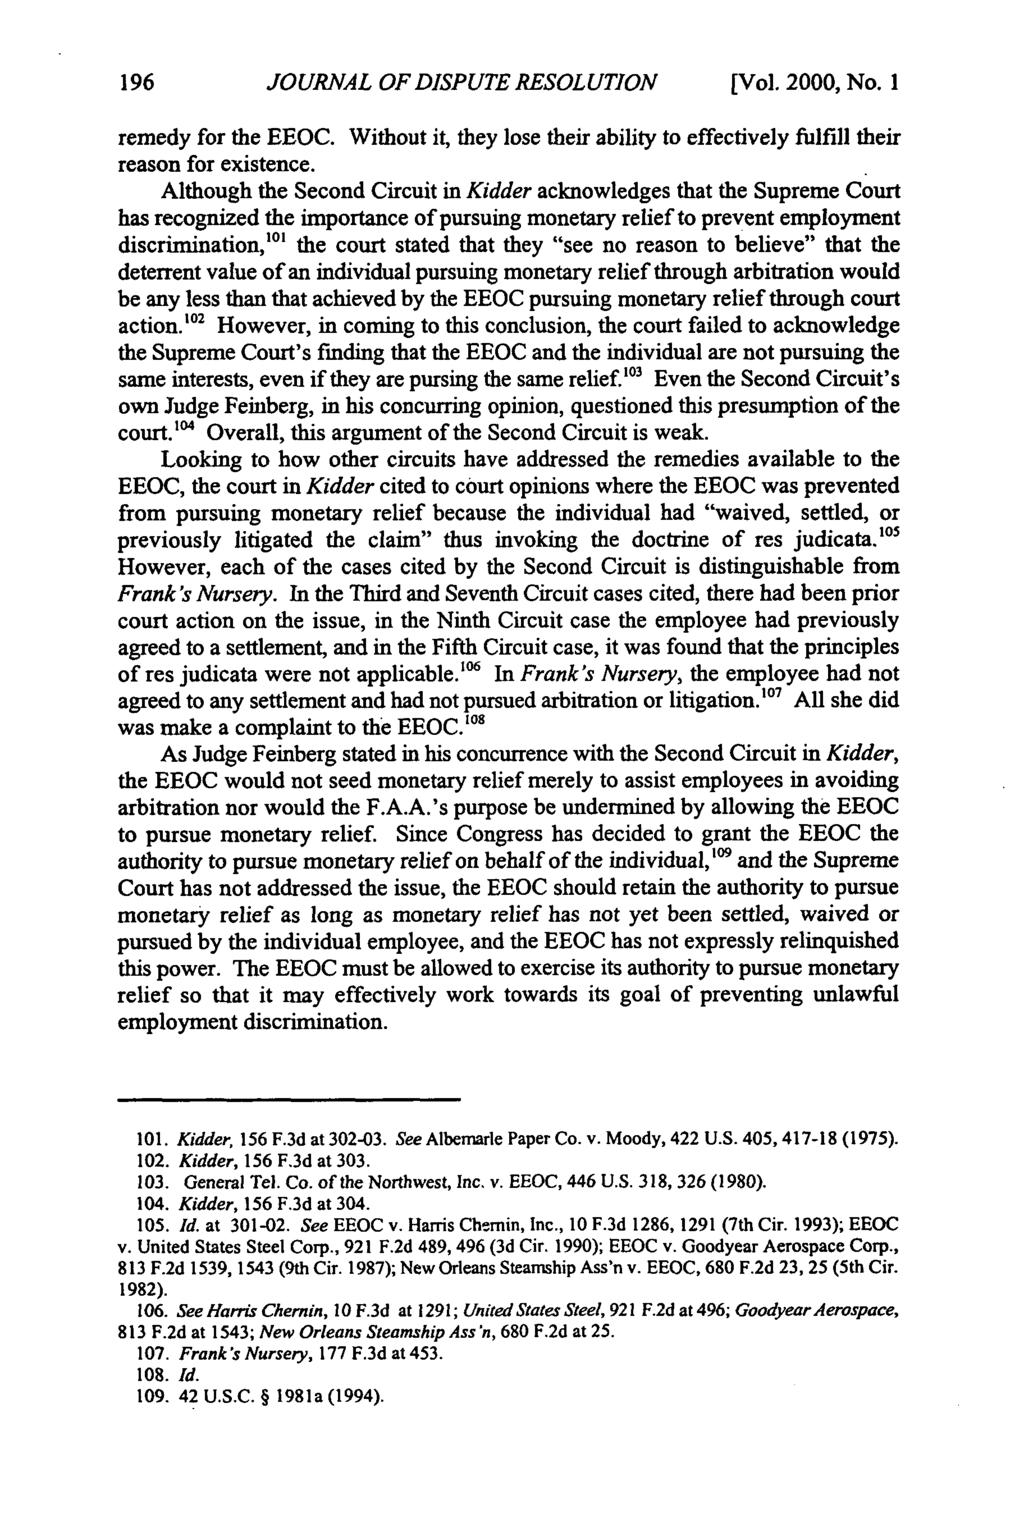 Journal of Dispute Resolution, Vol. 2000, Iss. 1 [2000], Art. 17 JOURNAL OF DISPUTE RESOLUTION [Vol. 2000, No. I remedy for the EEOC.